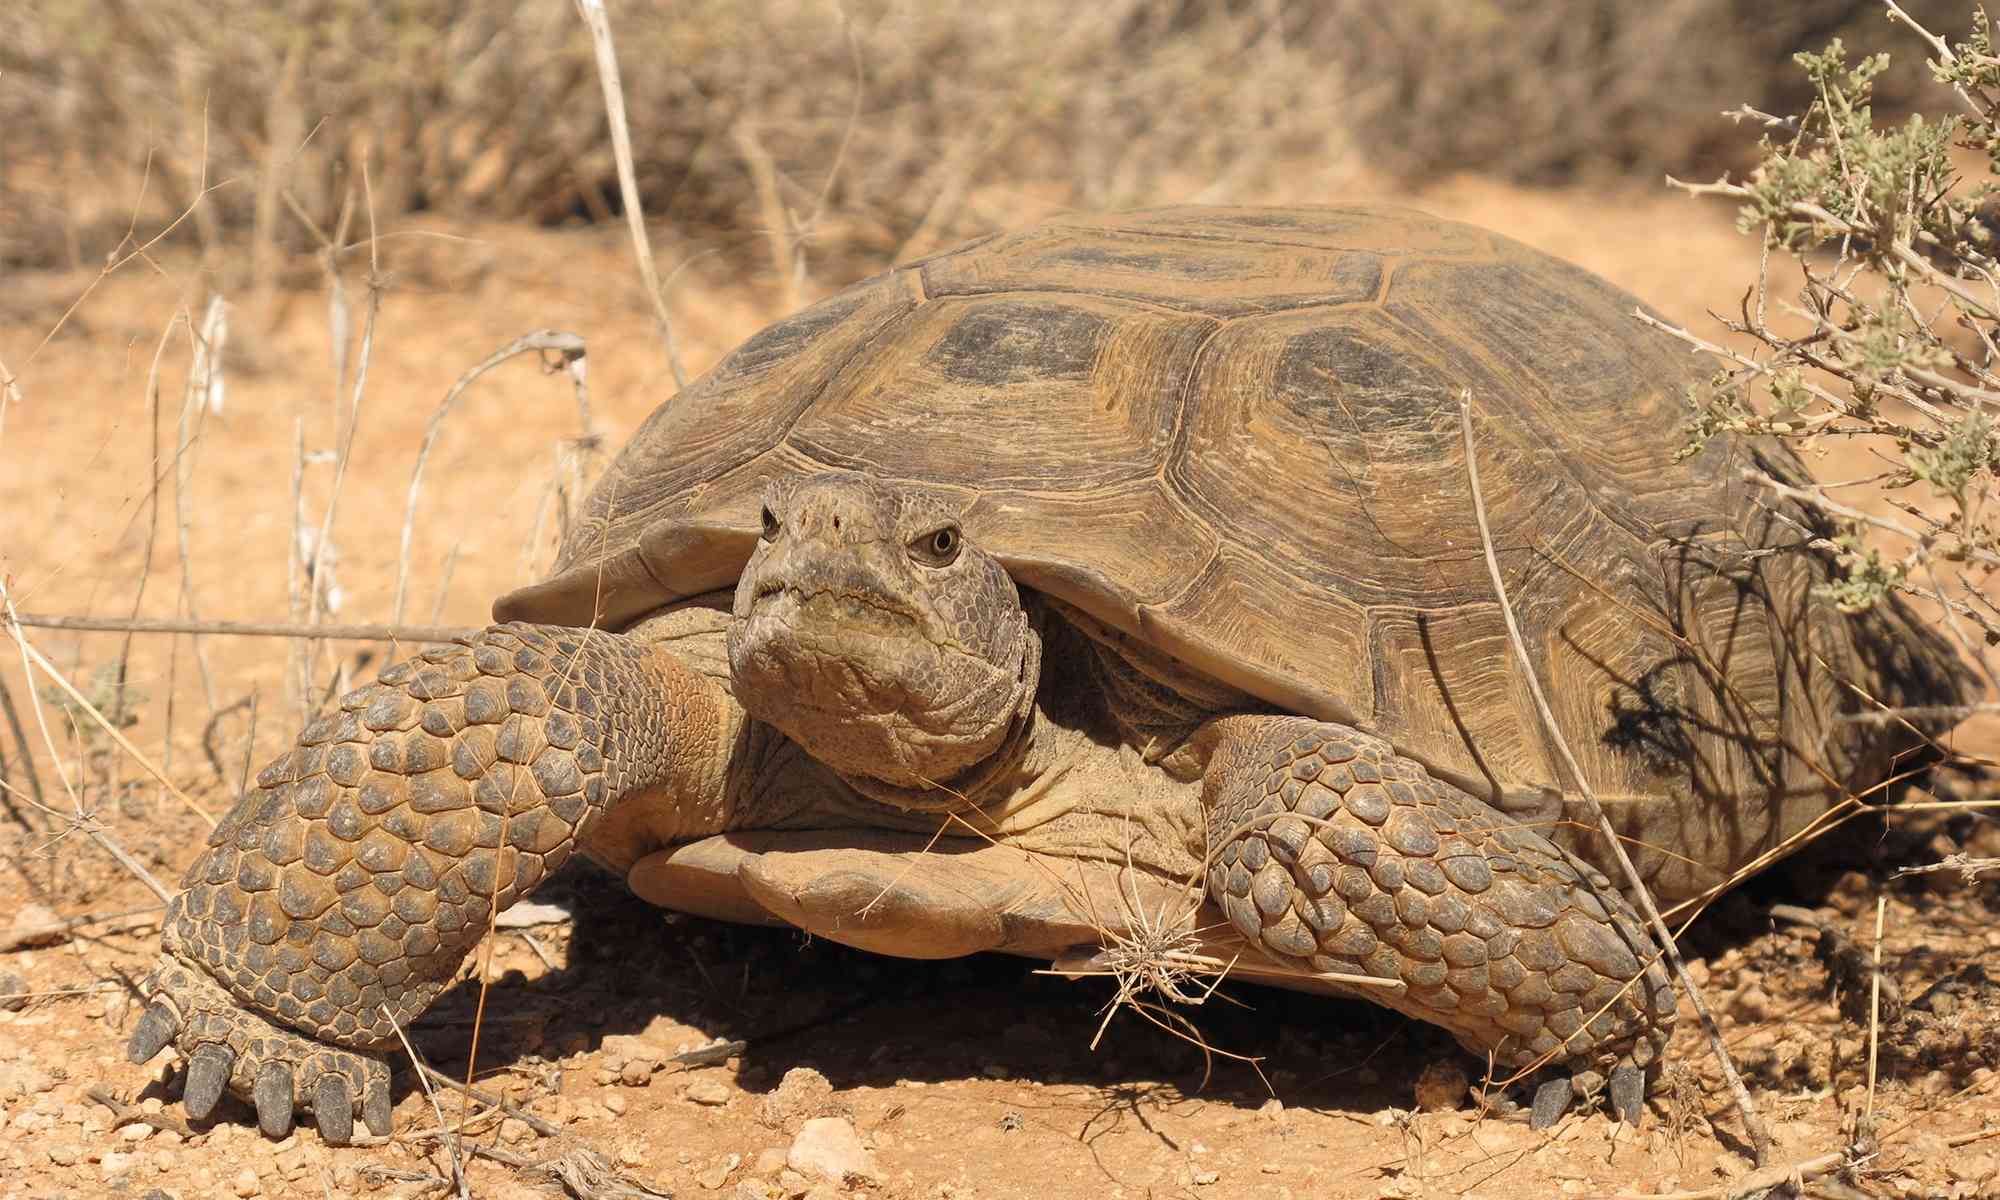 Where is a tortoise natural habitat?